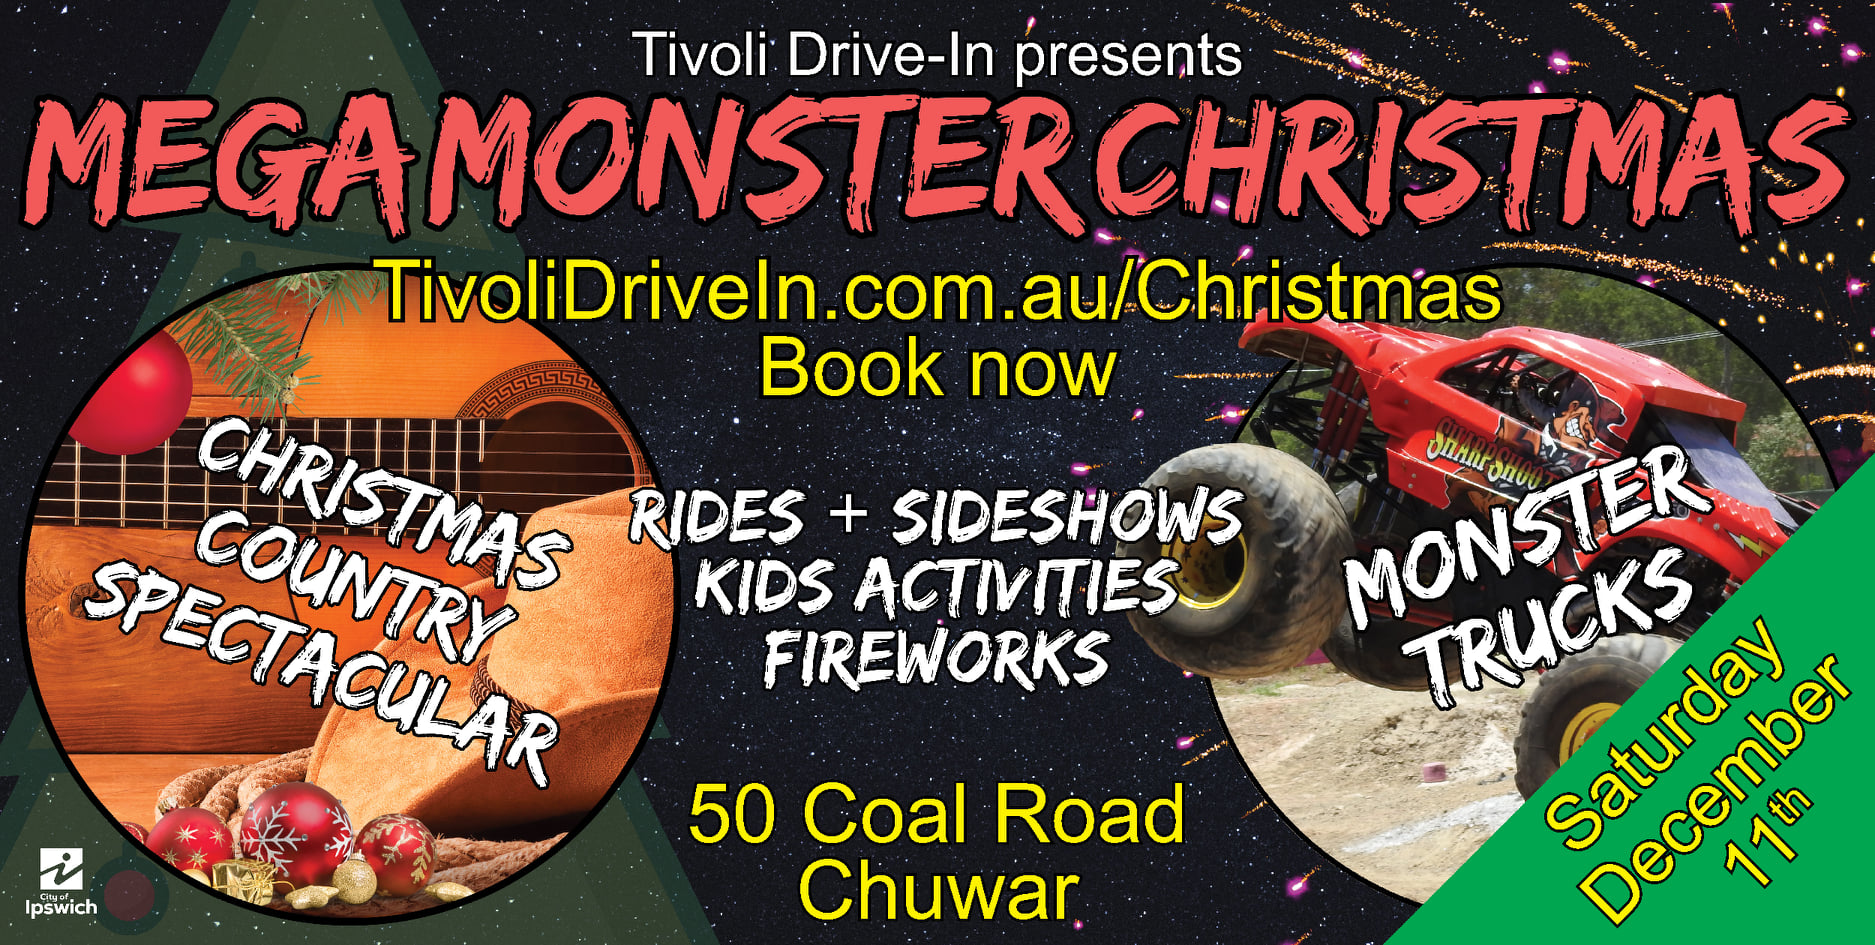 Monster trucks are coming back to Tivoli for Christmas